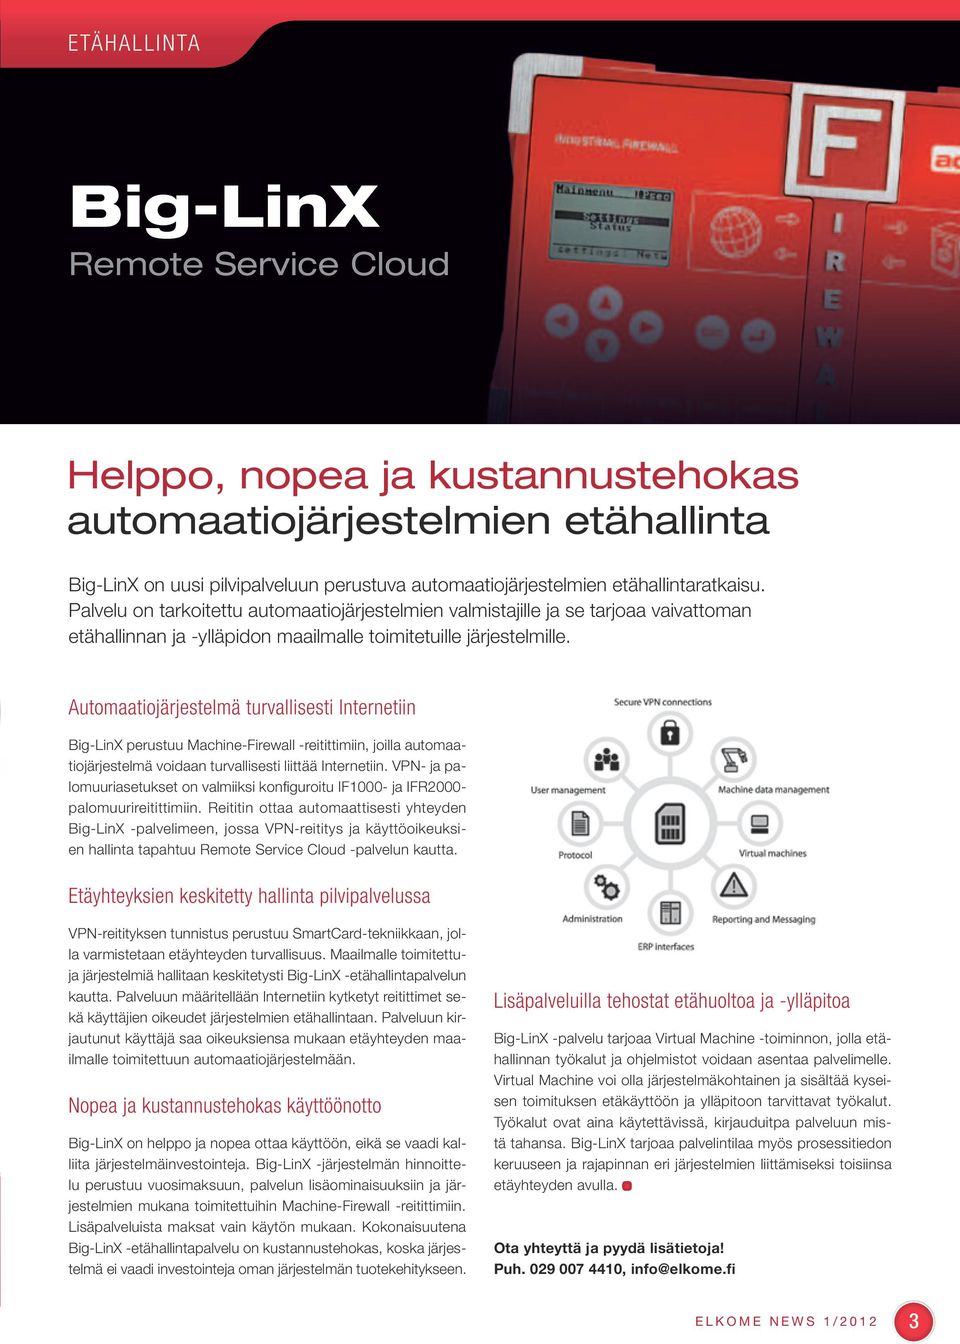 Automaatiojärjestelmä turvallisesti Internetiin Big-LinX perustuu Machine-Firewall -reitittimiin, joilla automaatiojärjestelmä voidaan turvallisesti liittää Internetiin.